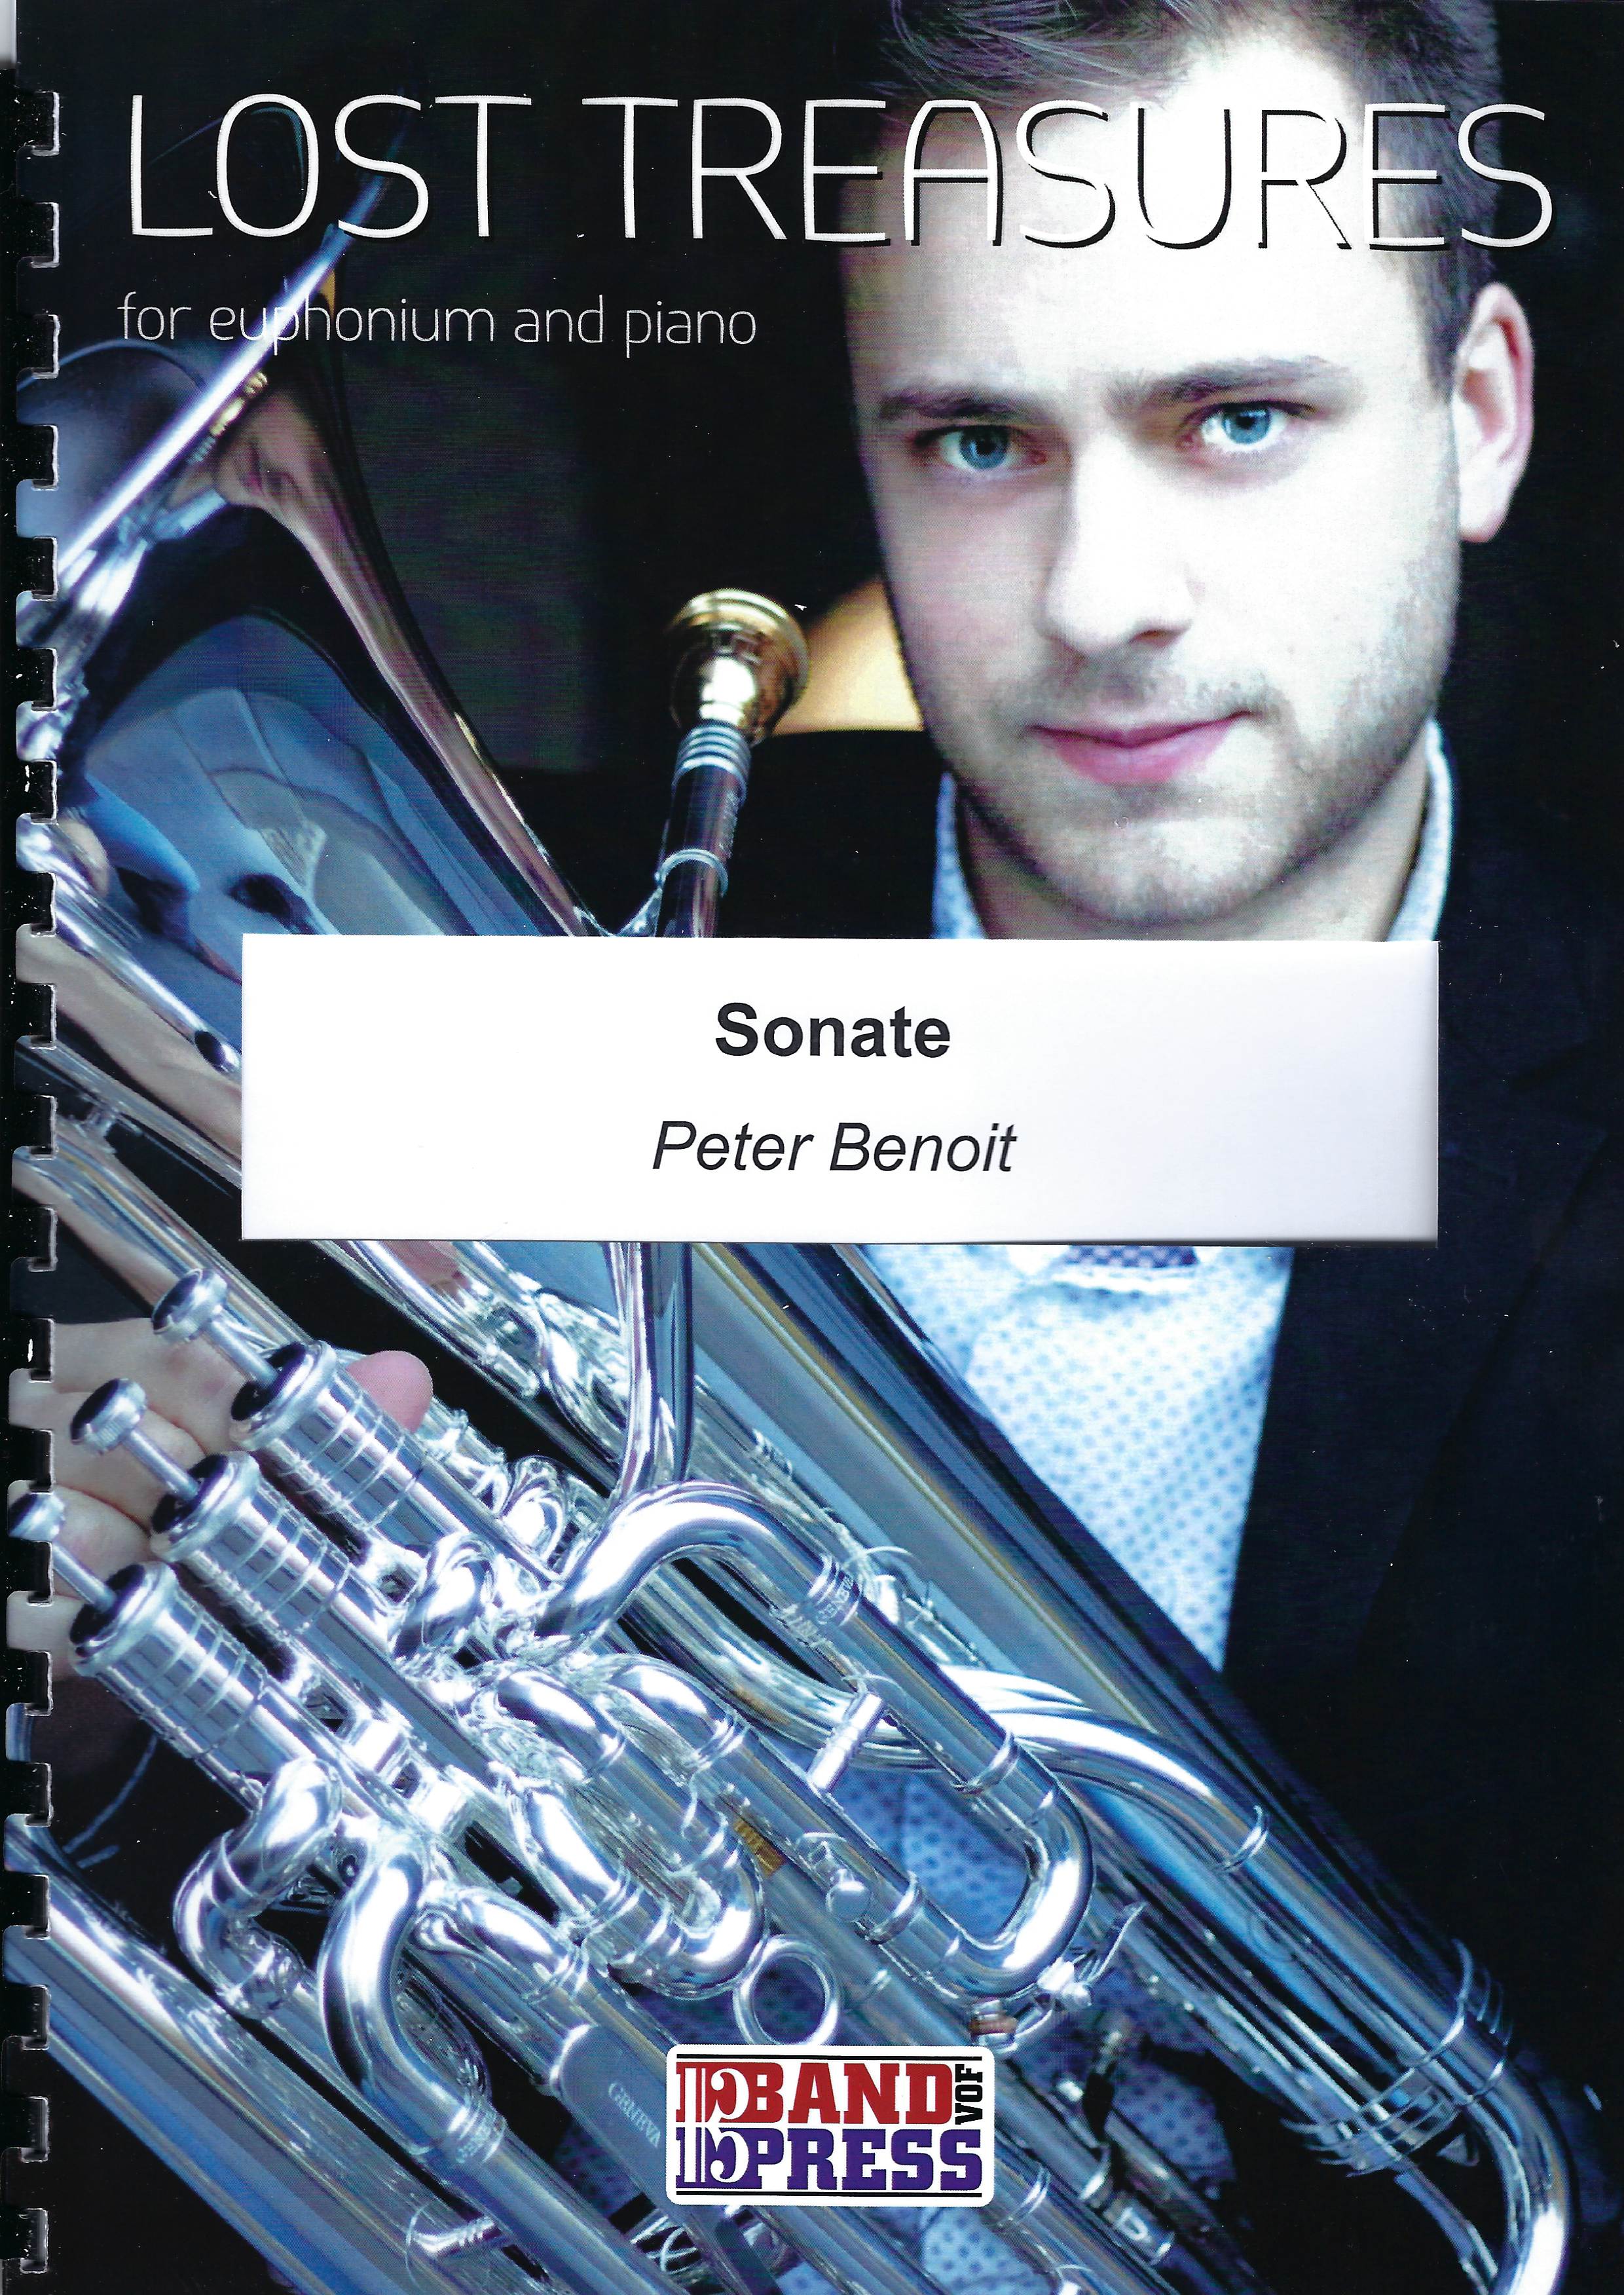 Sonate (Sonata) - Peter Benoit - Euph and Piano (Lost Treasures Series)